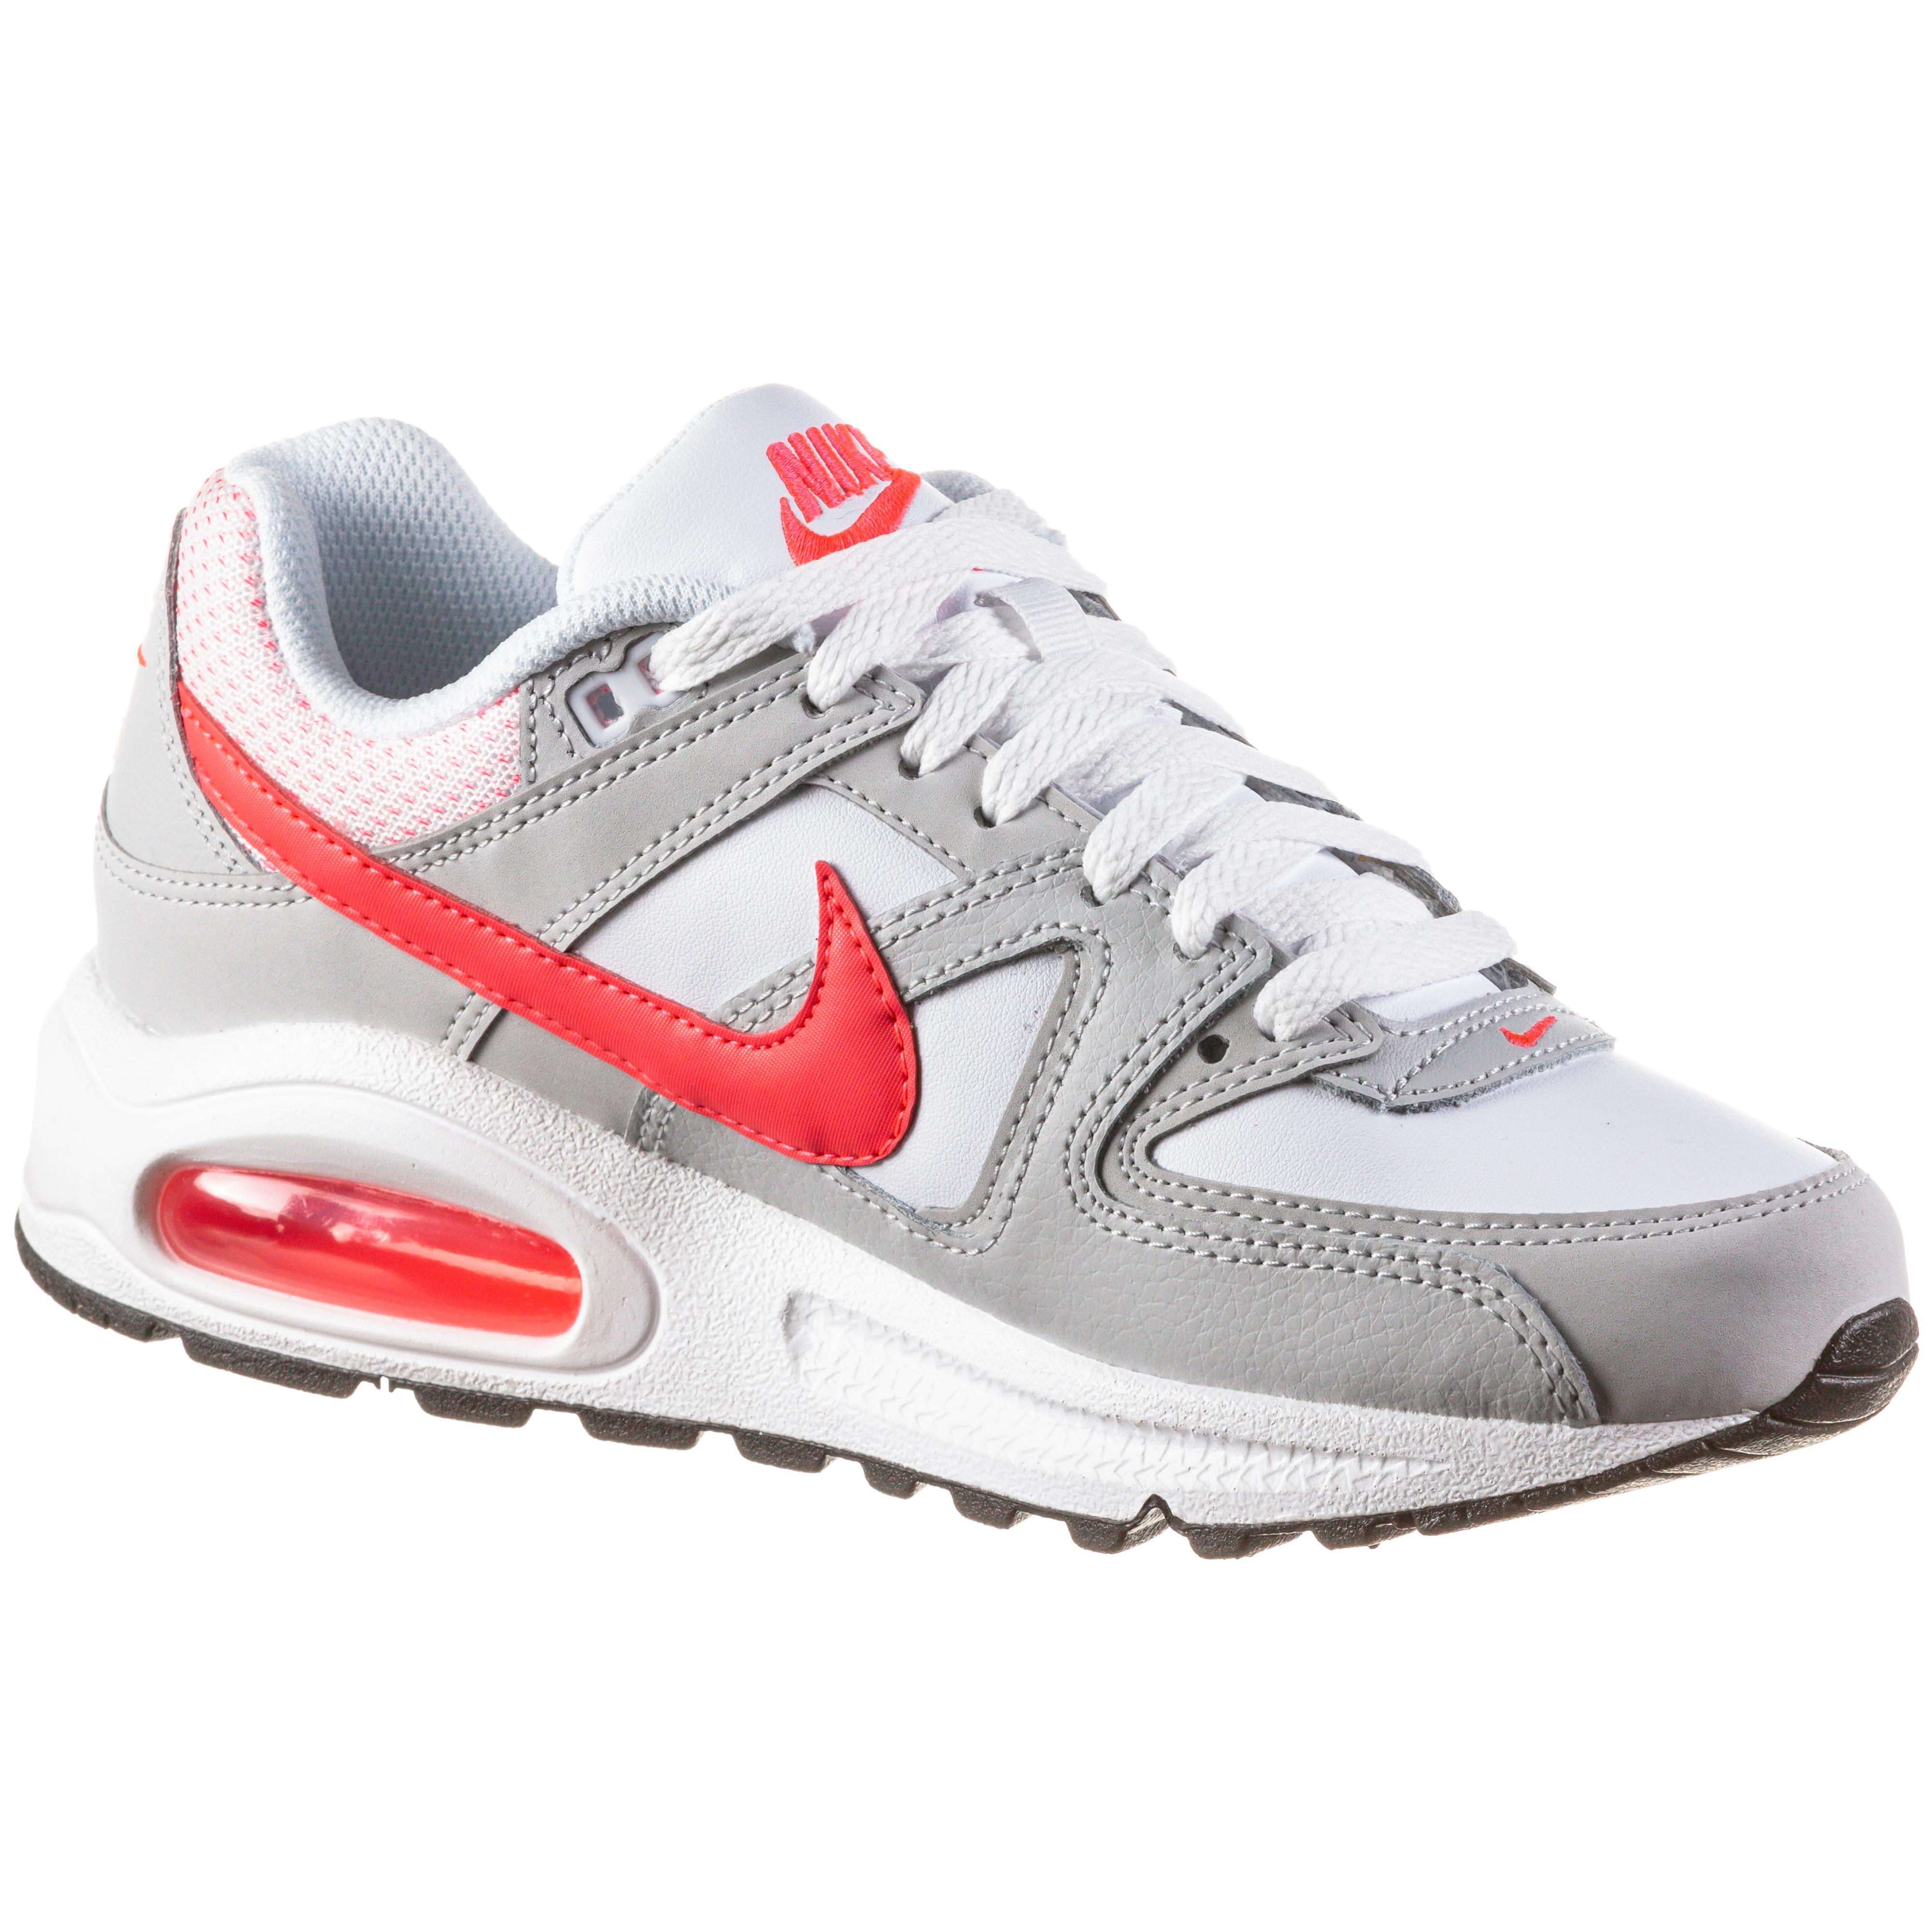 Nike Max Command Sneaker Damen white-hyper punch-light ash grey im Online kaufen